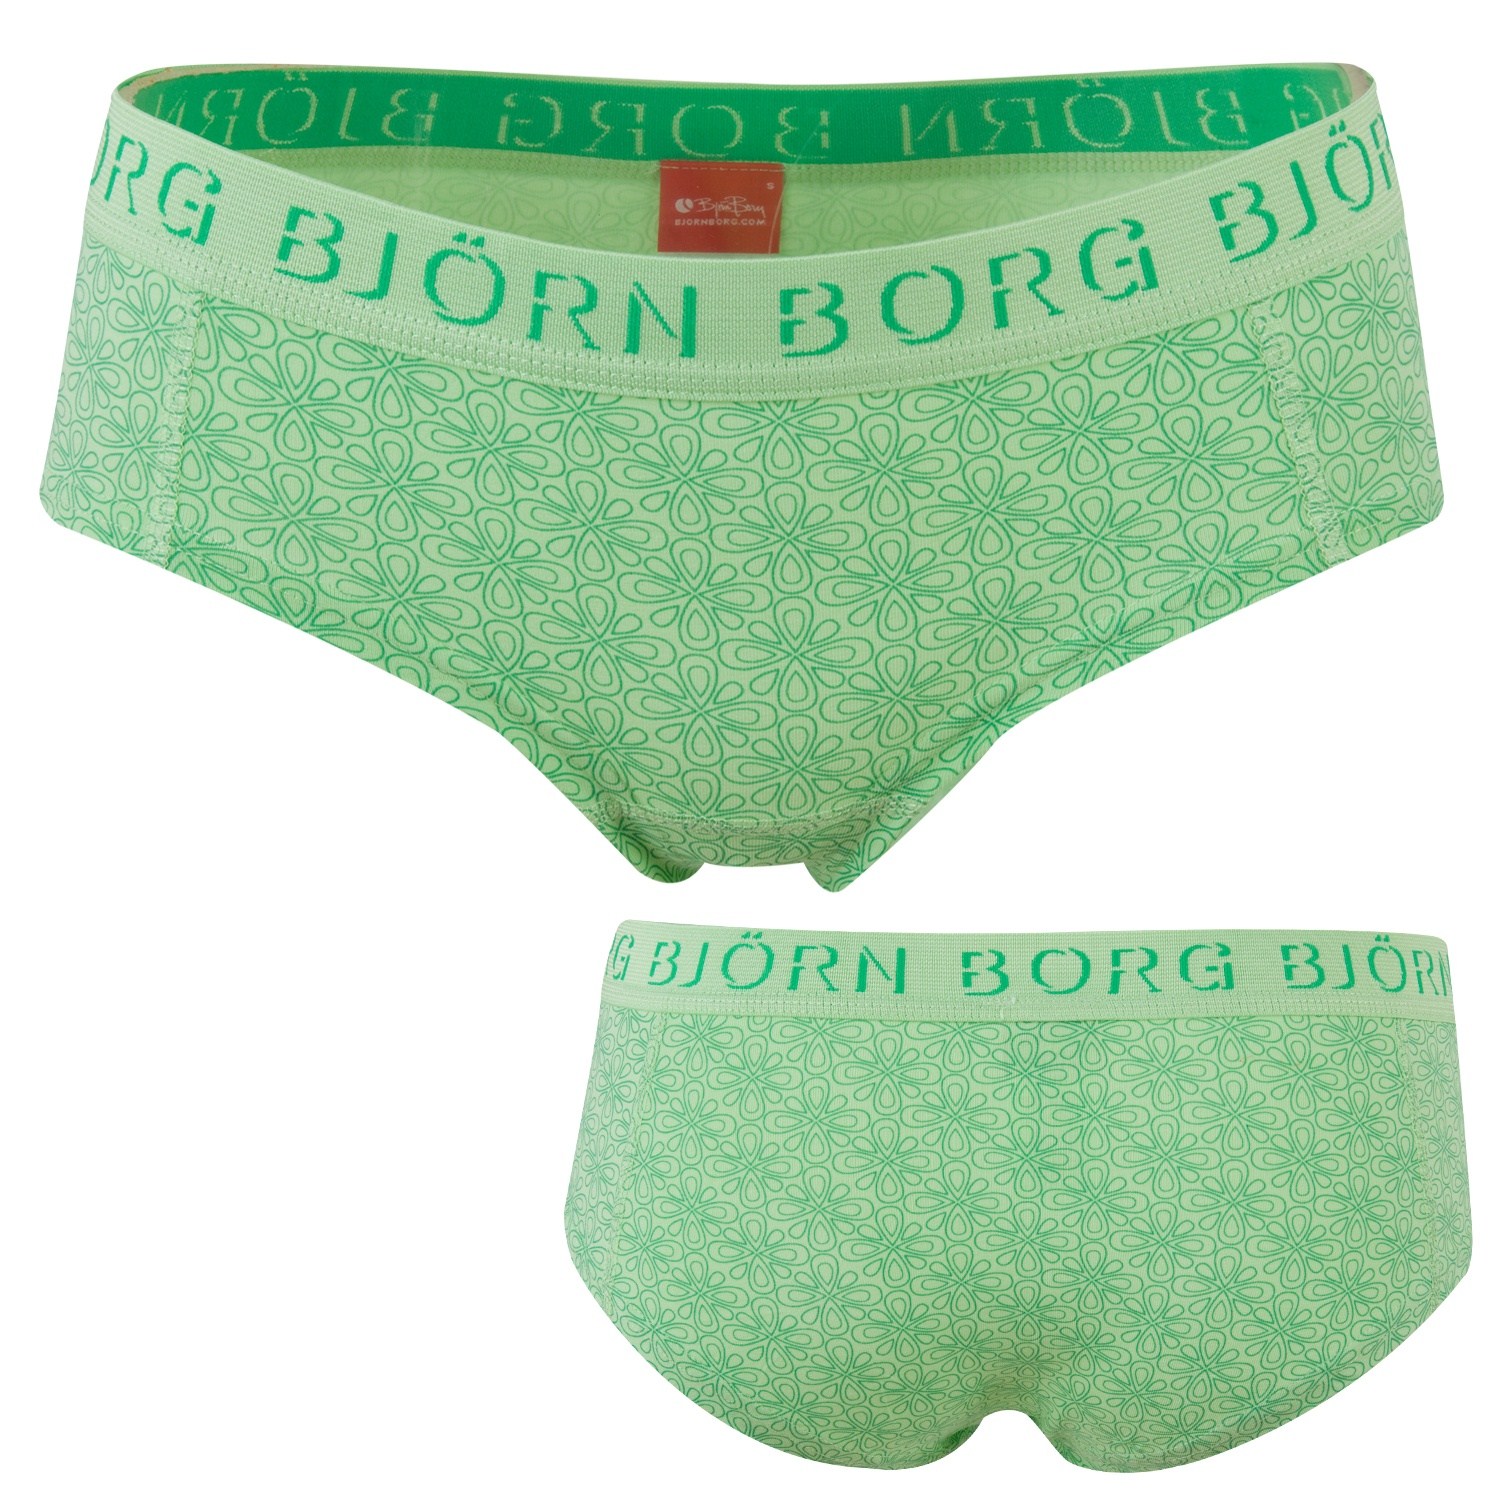 Björn Borg Hipster 2013-8156